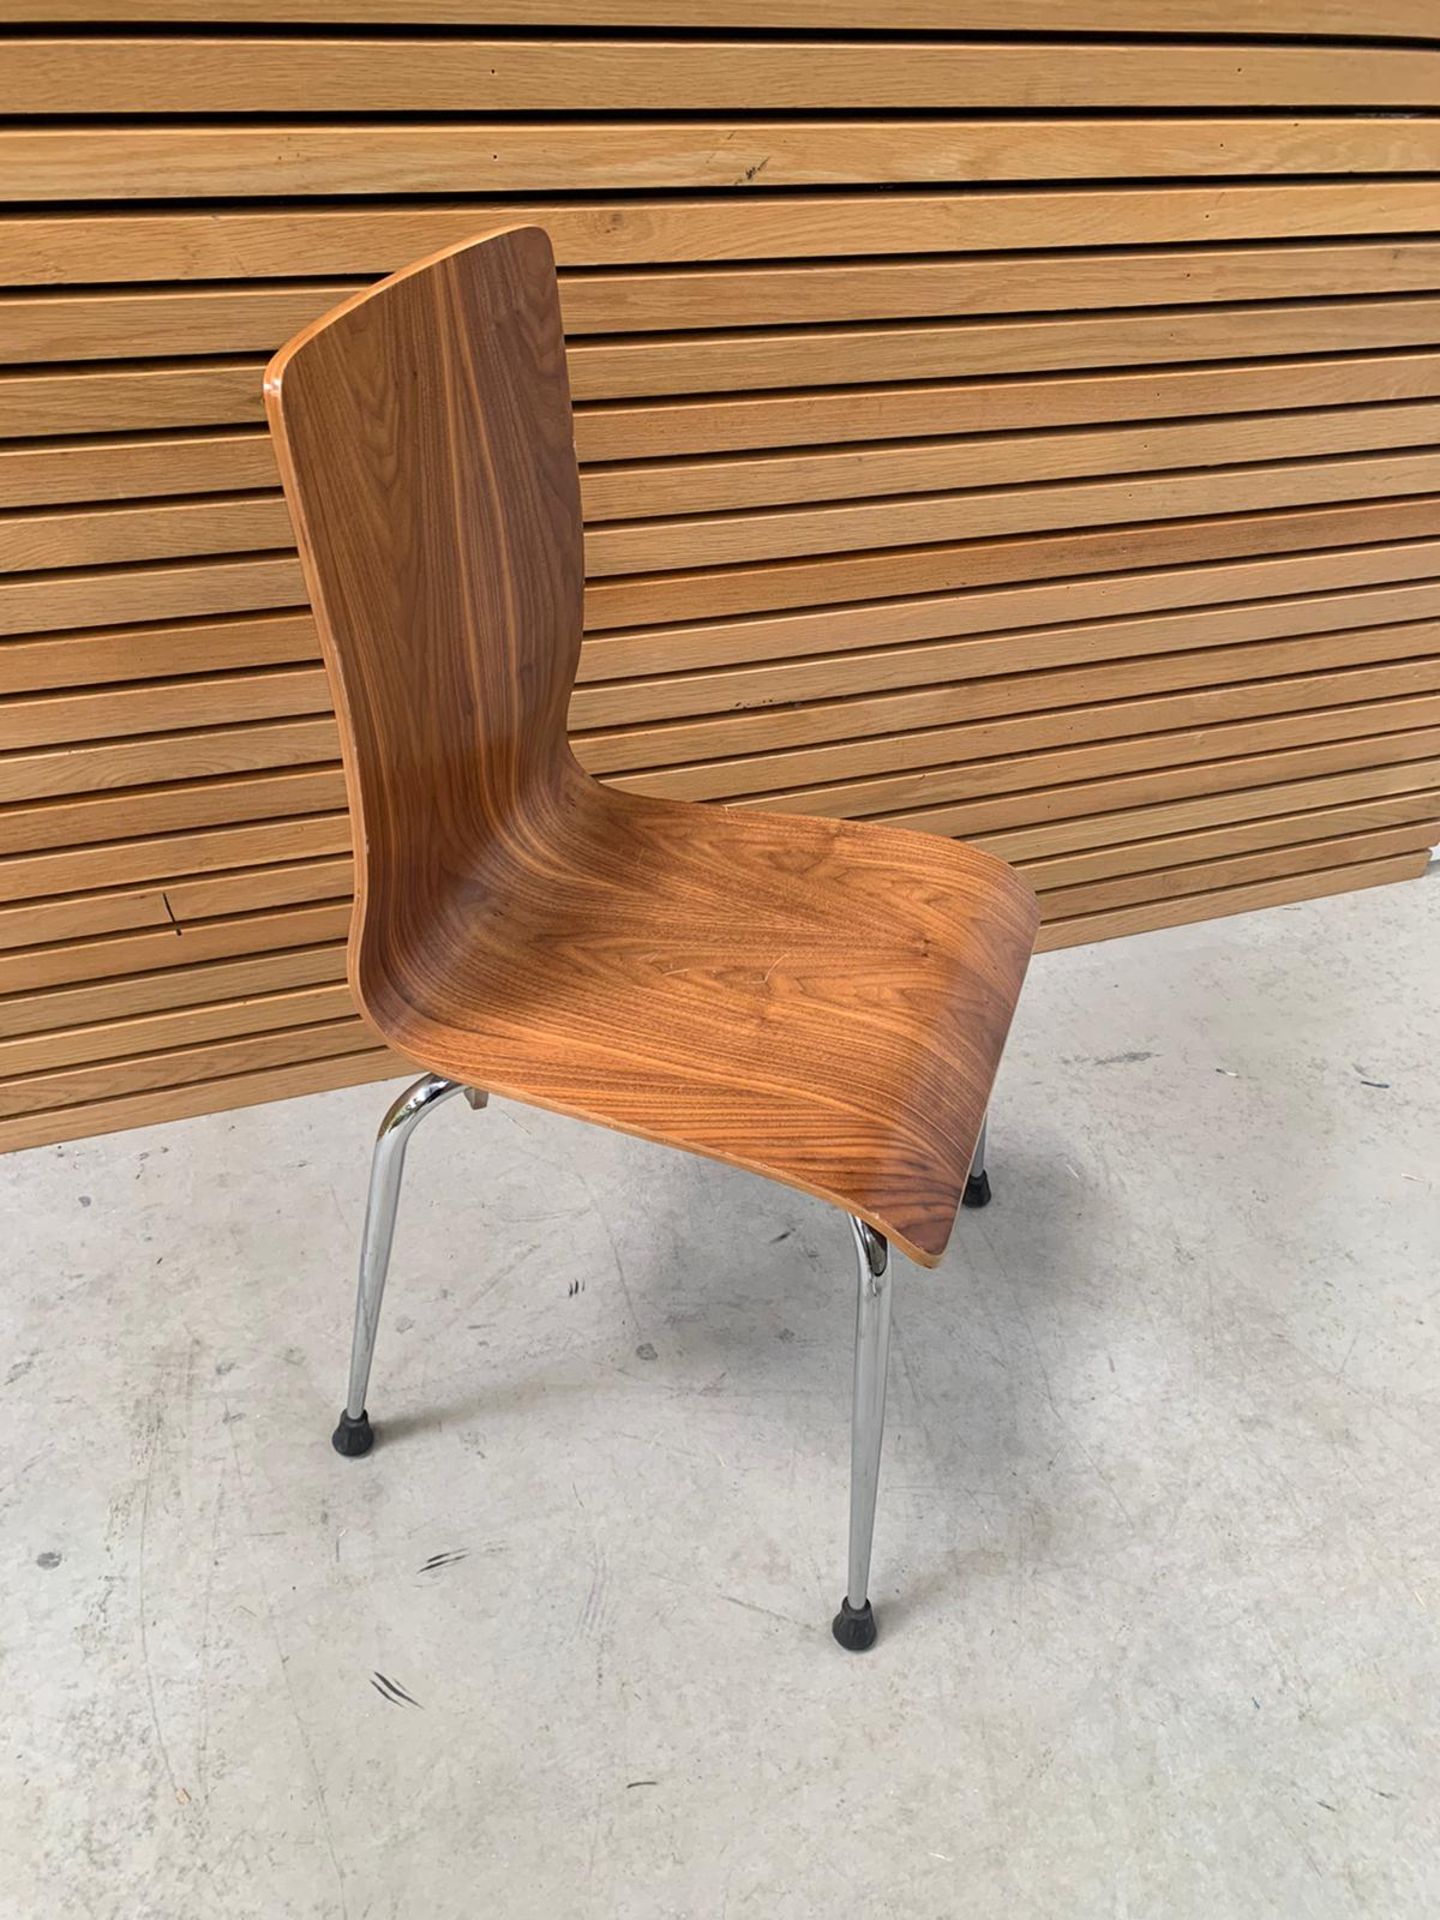 Oak Woodgrain Effect Commercial Grade Chairs - Image 6 of 10